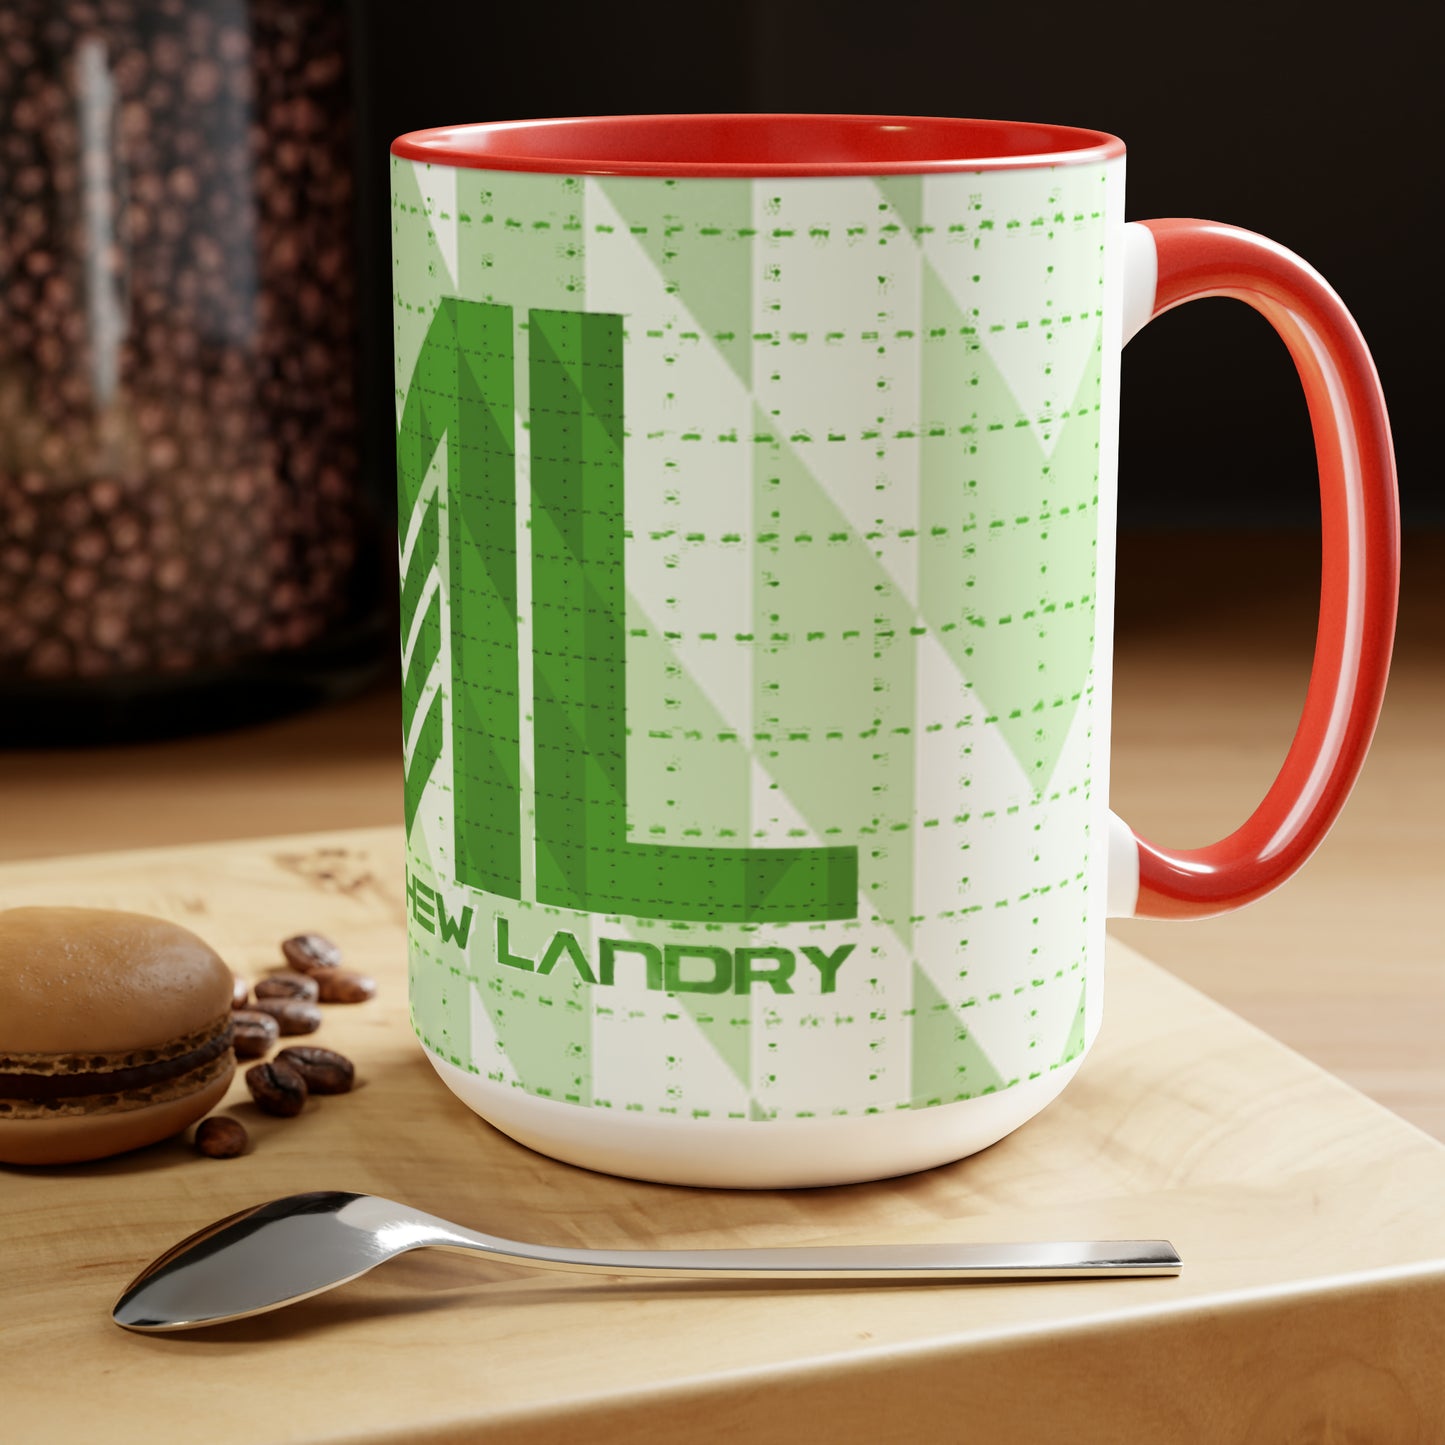 JML "Blotter" Two-Tone Coffee Mugs, 15oz